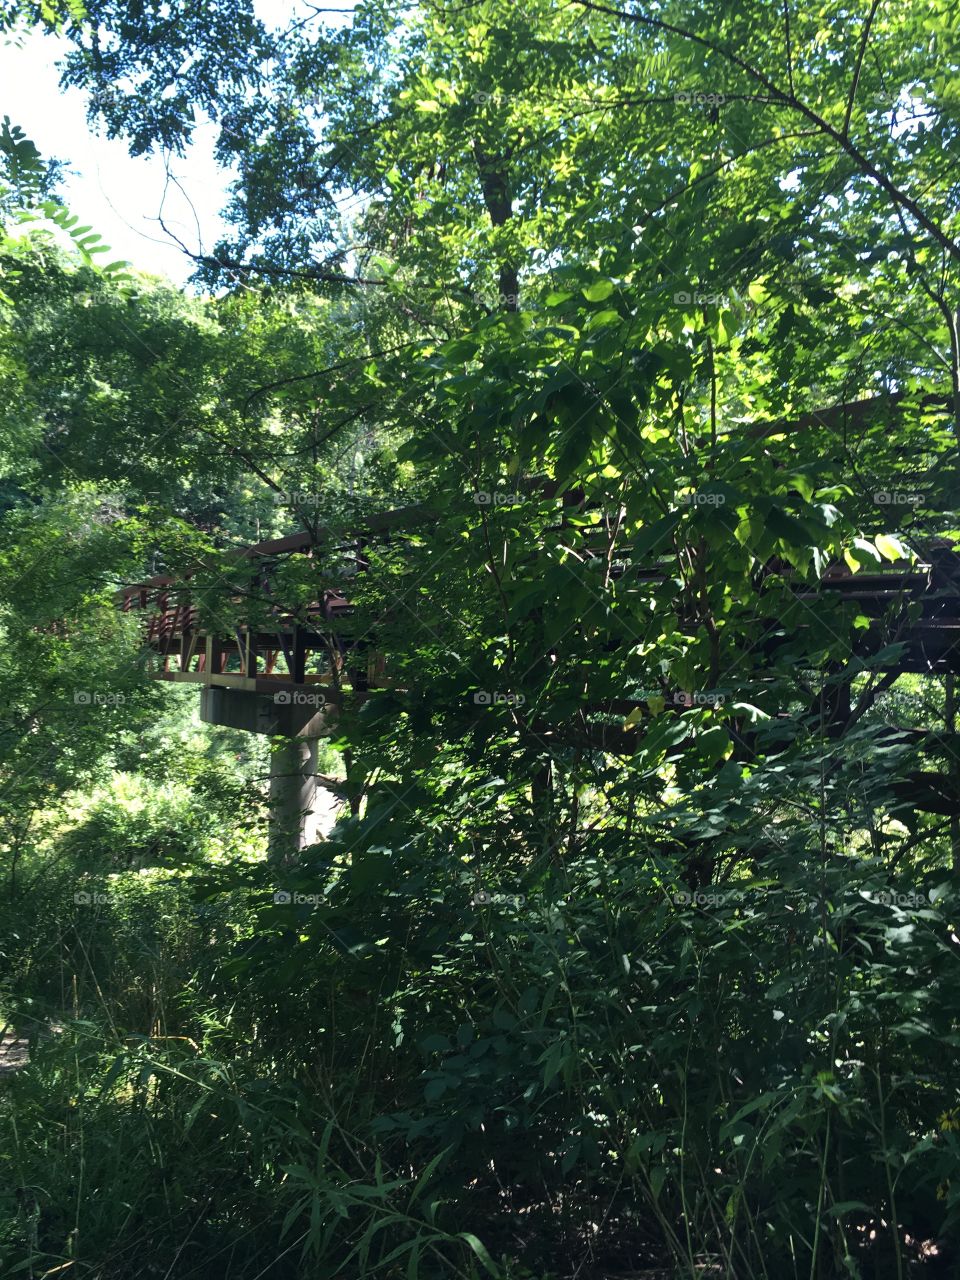 Bridge in trees